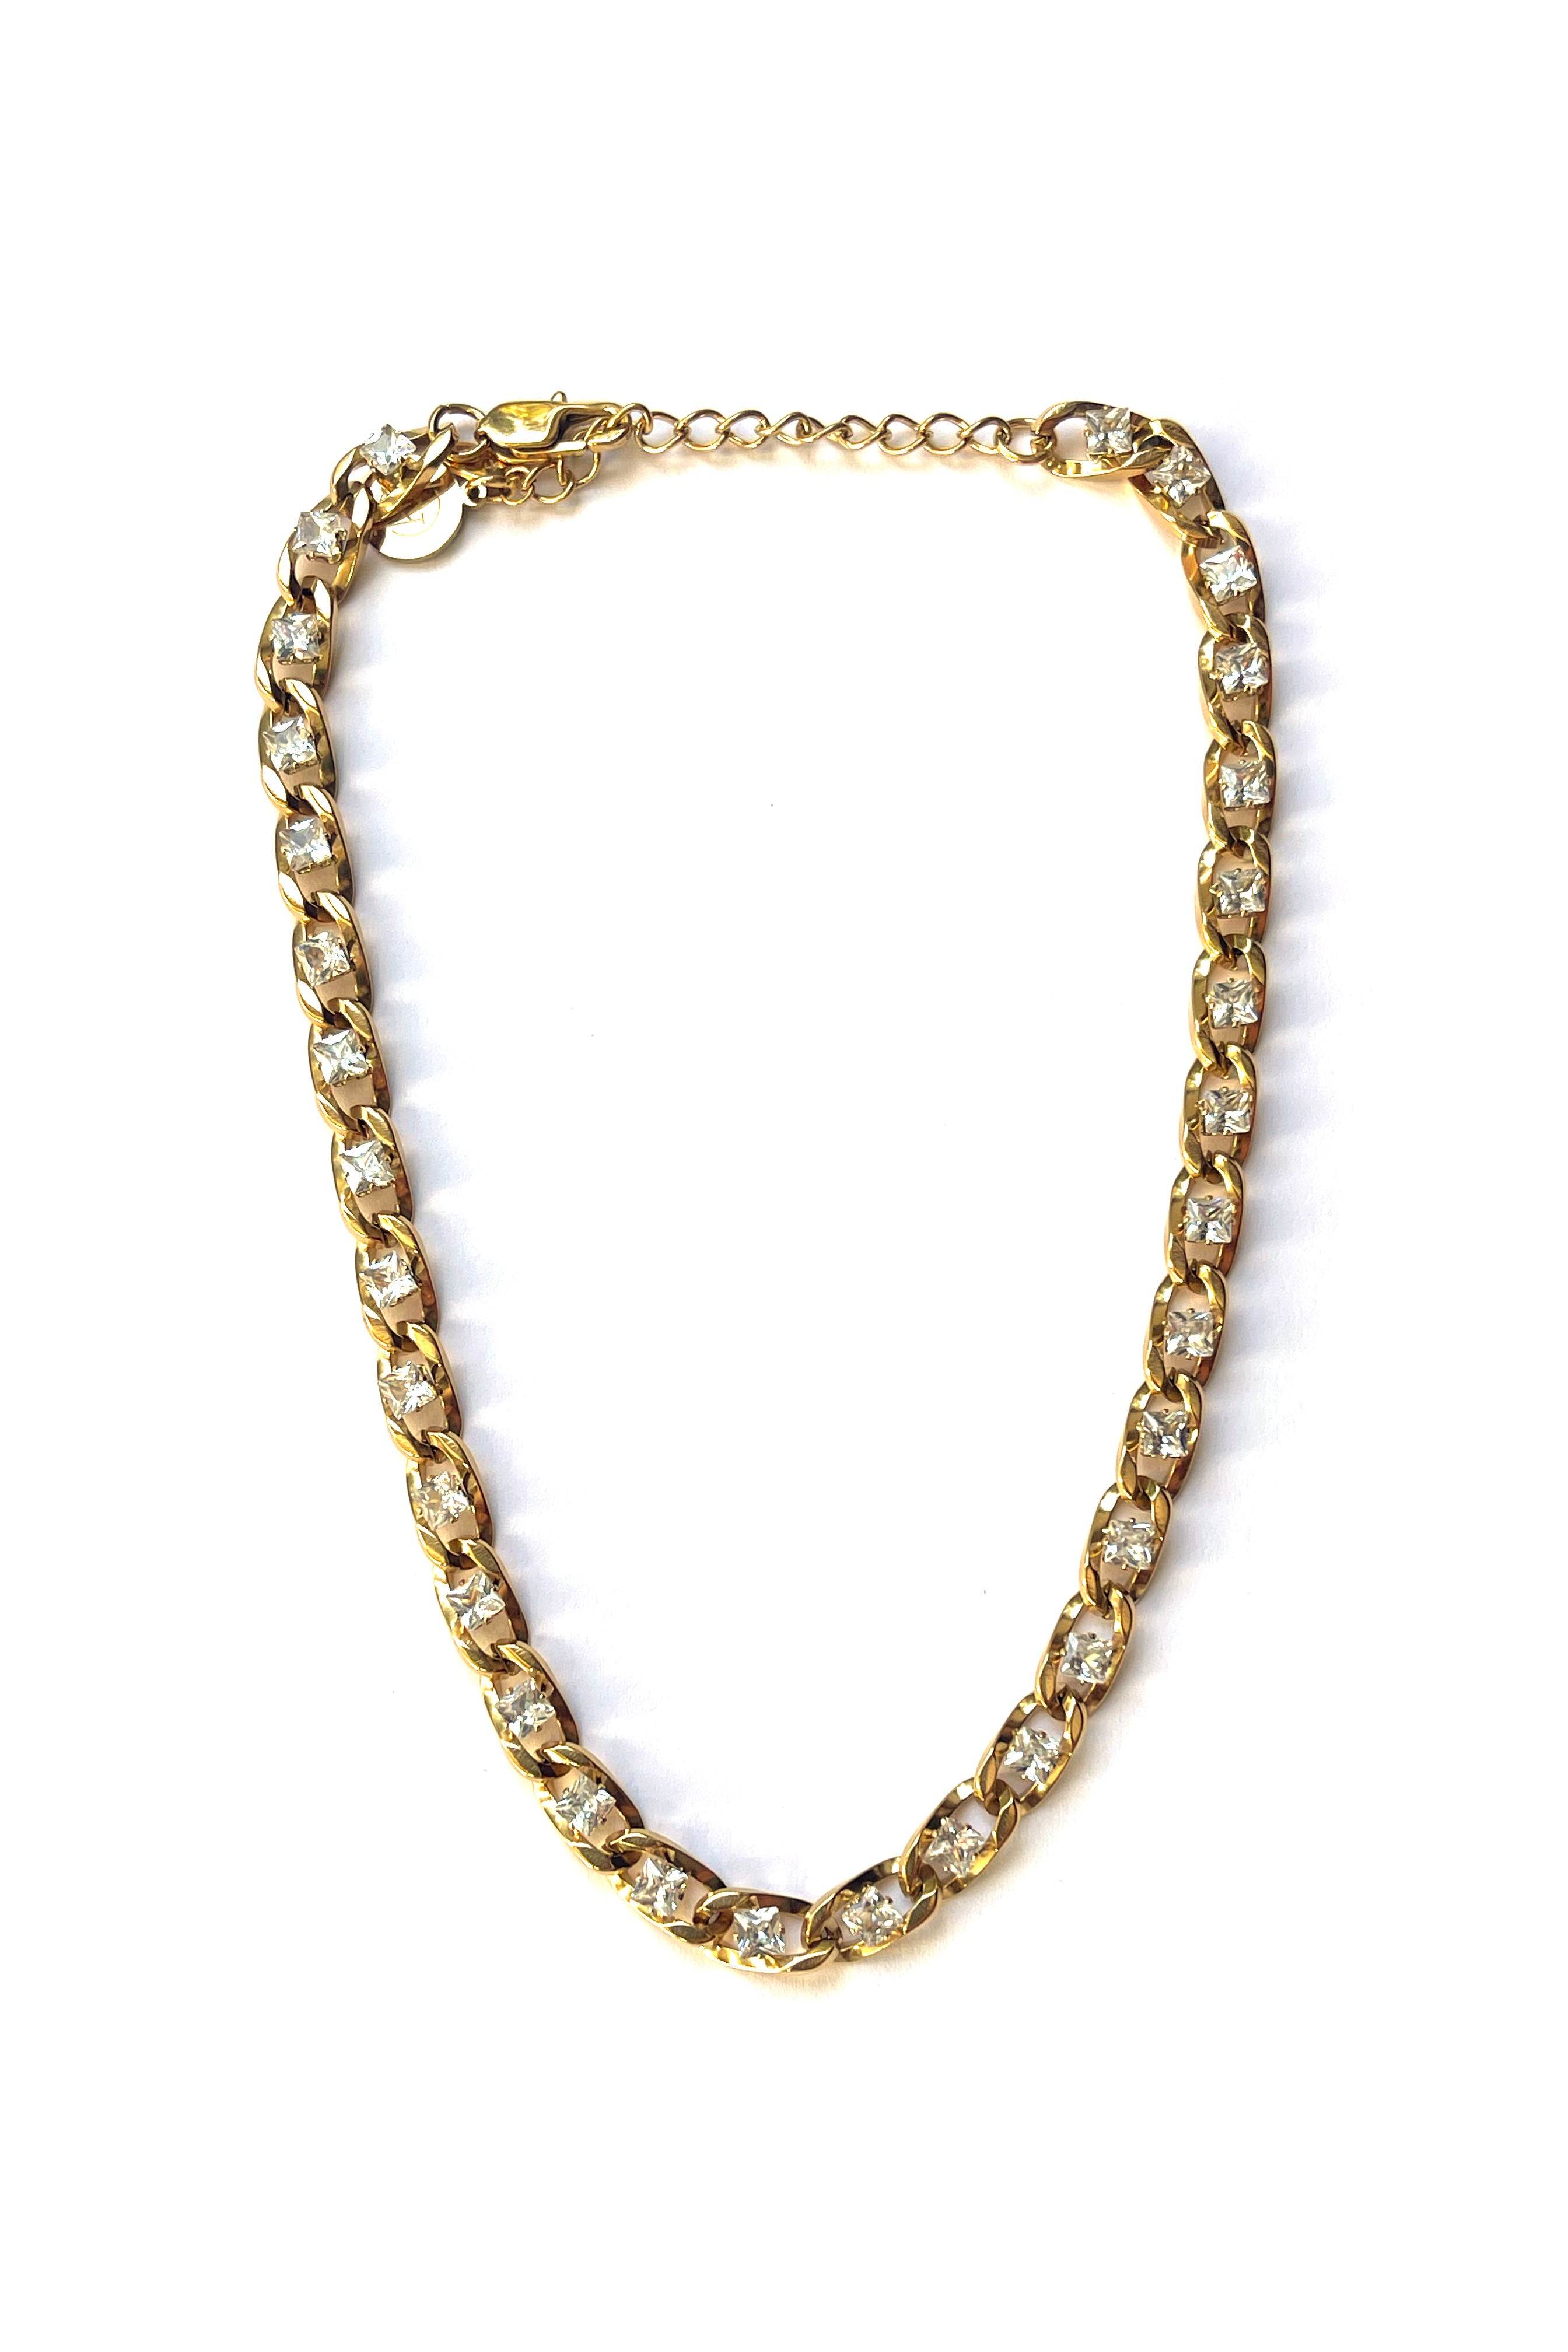 JEWELRY. Sam Lehr 18kt Gold, Gem and Diamond Necklace. by Sam Lehr Jewelry  on artnet